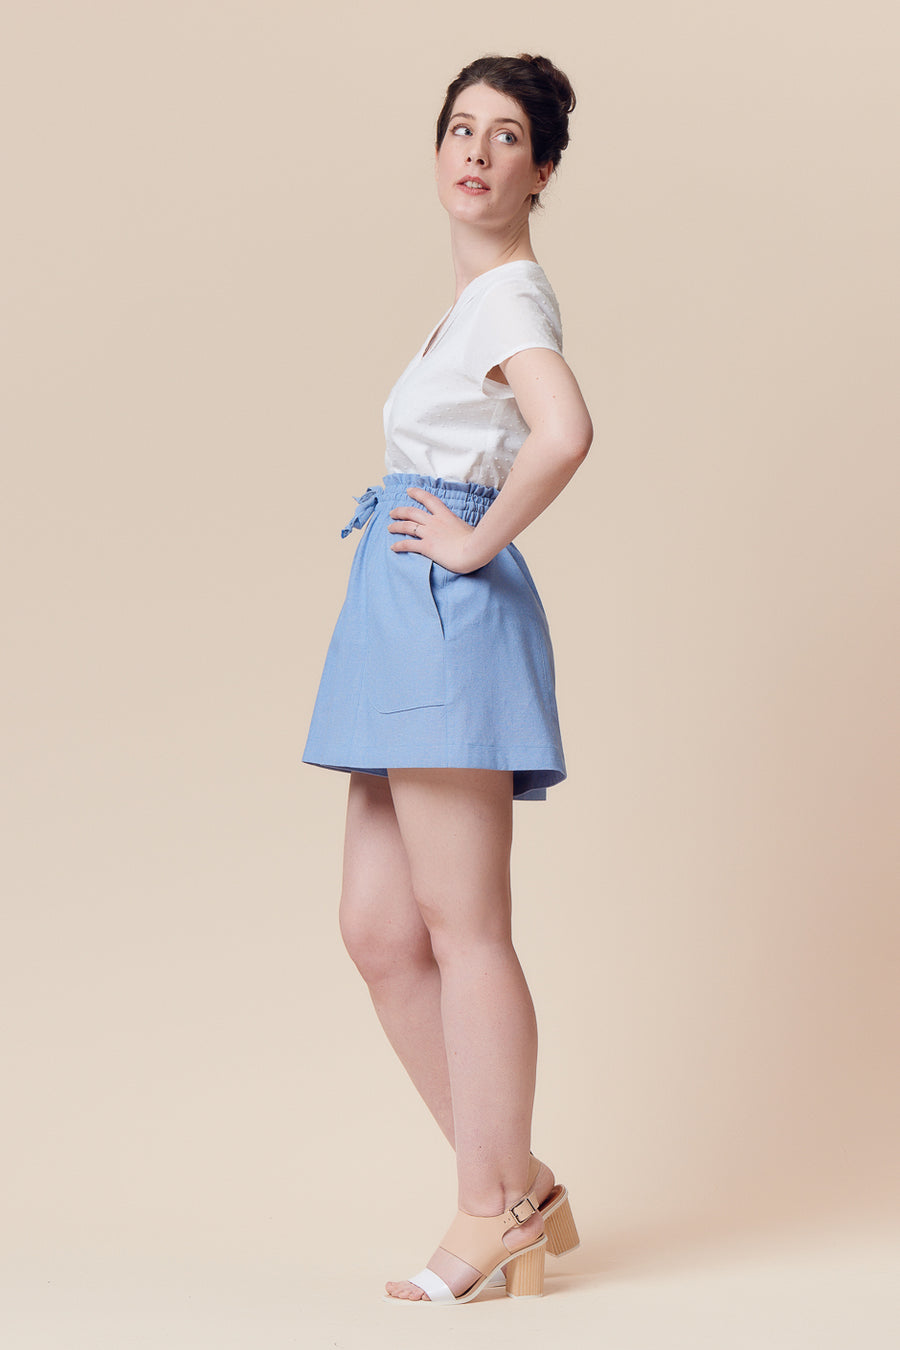 Goji Shorts + Skirt Pattern | Patron de Jupe + Short Goji | Deer & Doe